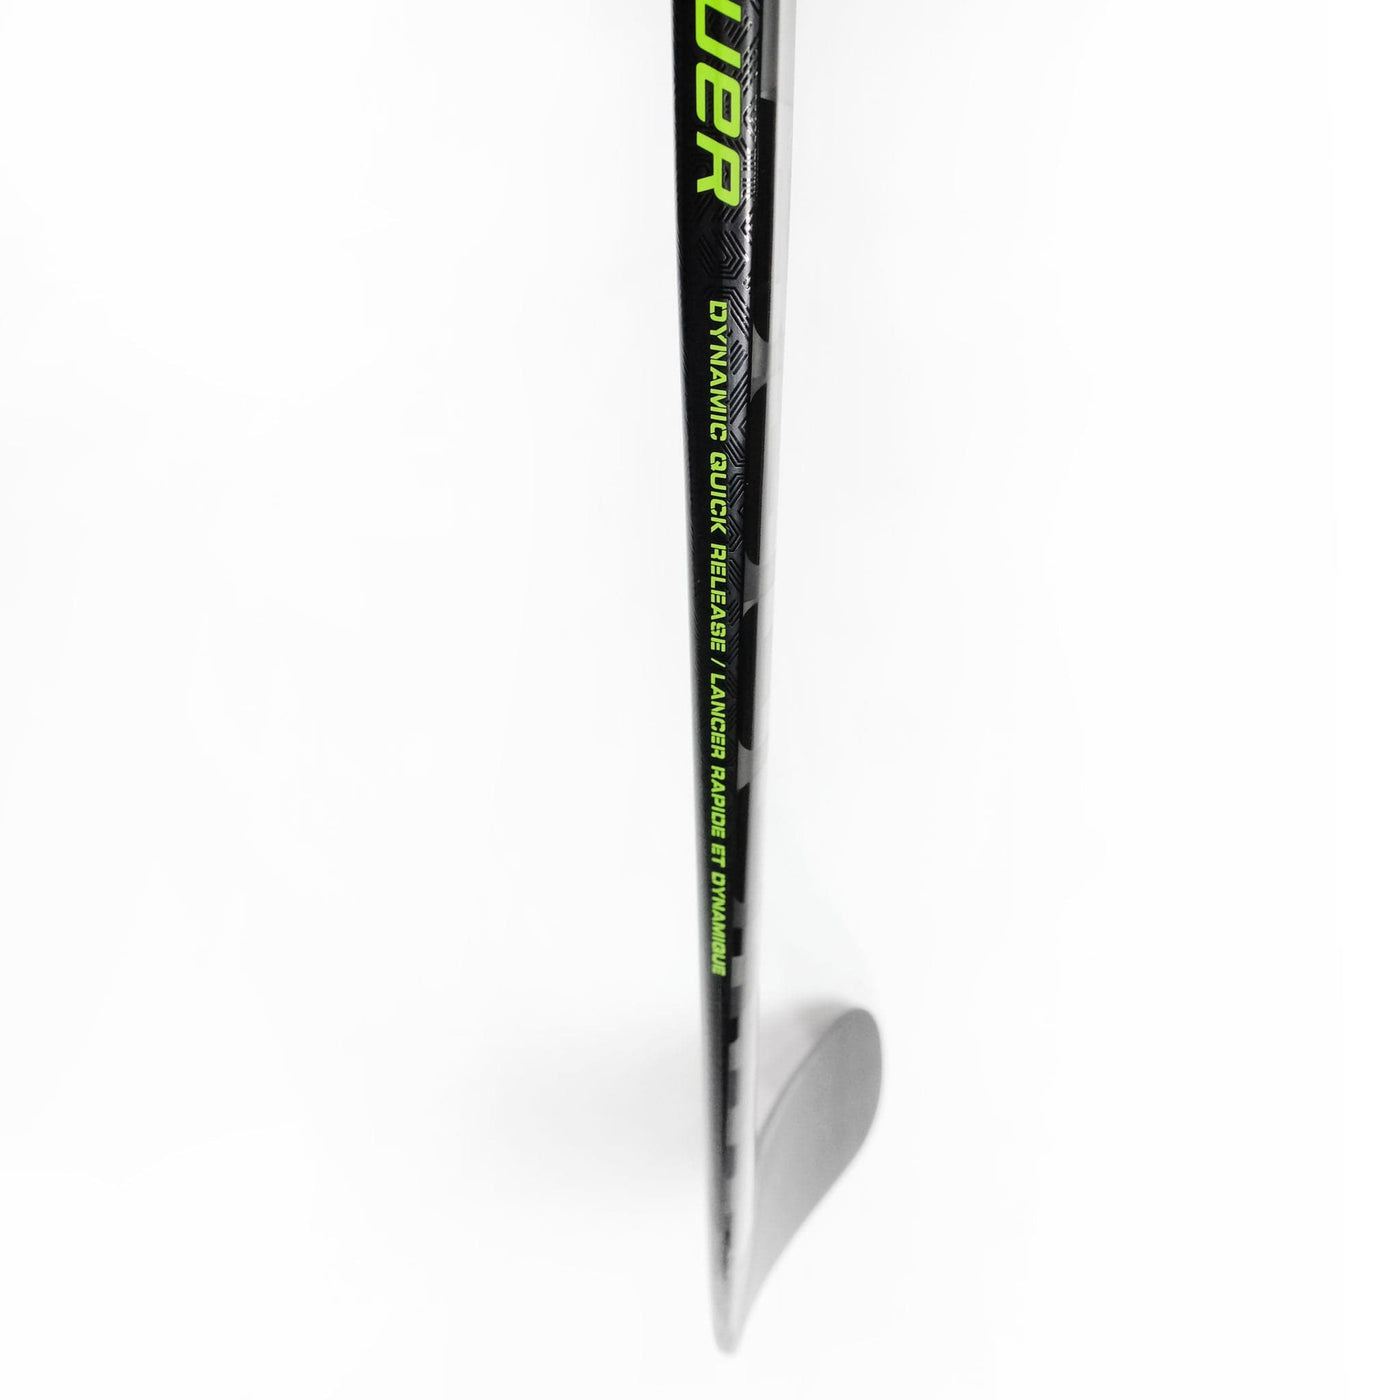 Bauer AG5NT Junior Hockey Stick - 50 Flex - The Hockey Shop Source For Sports